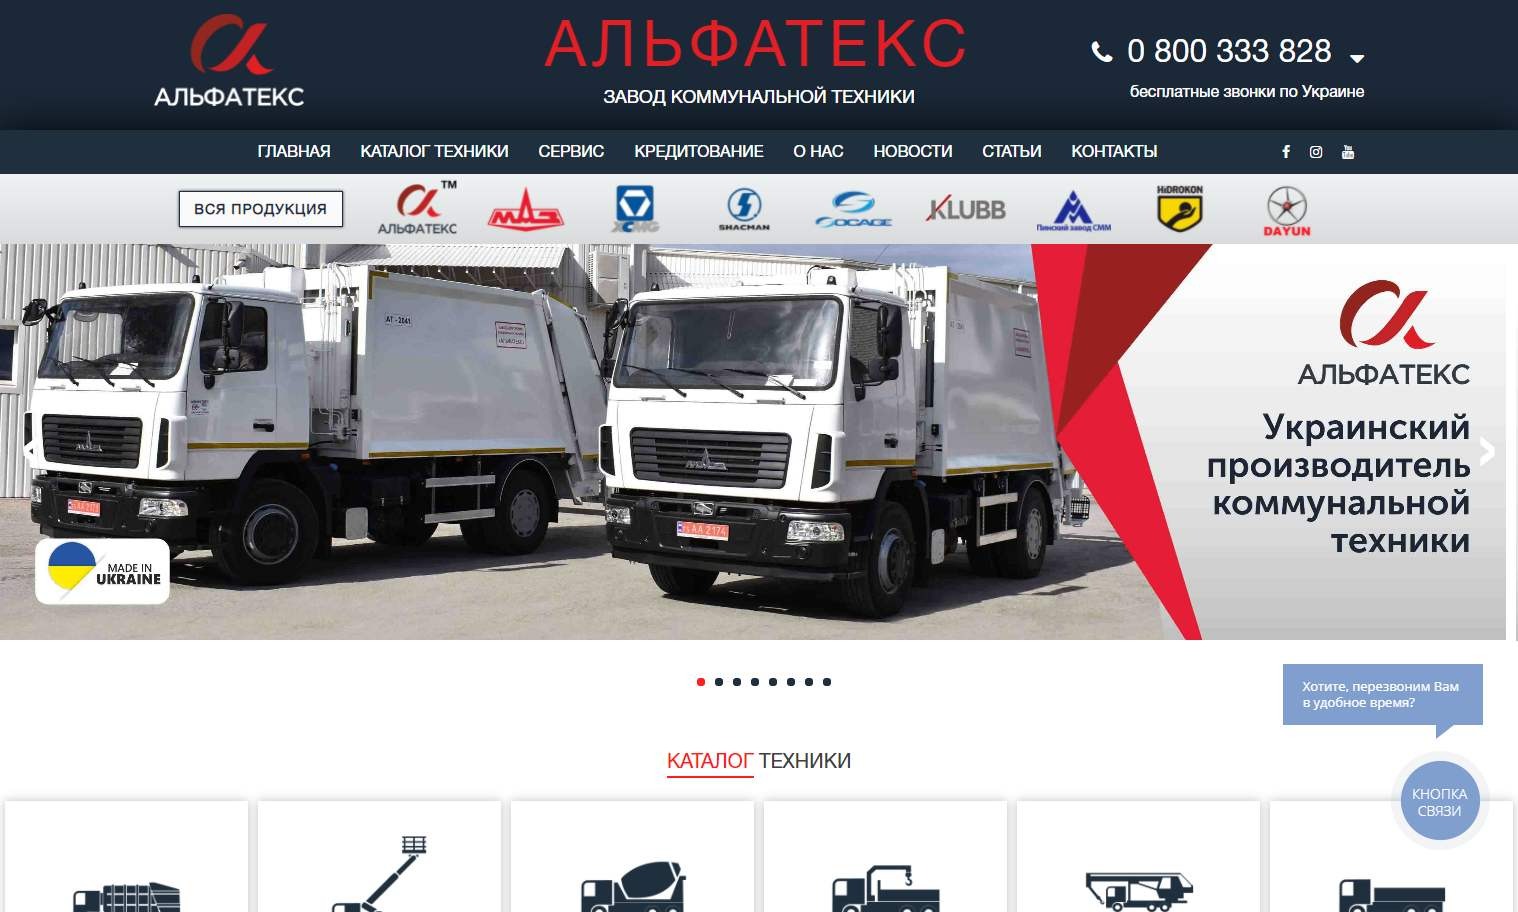 Corporate site of the manufacturer Alfatex